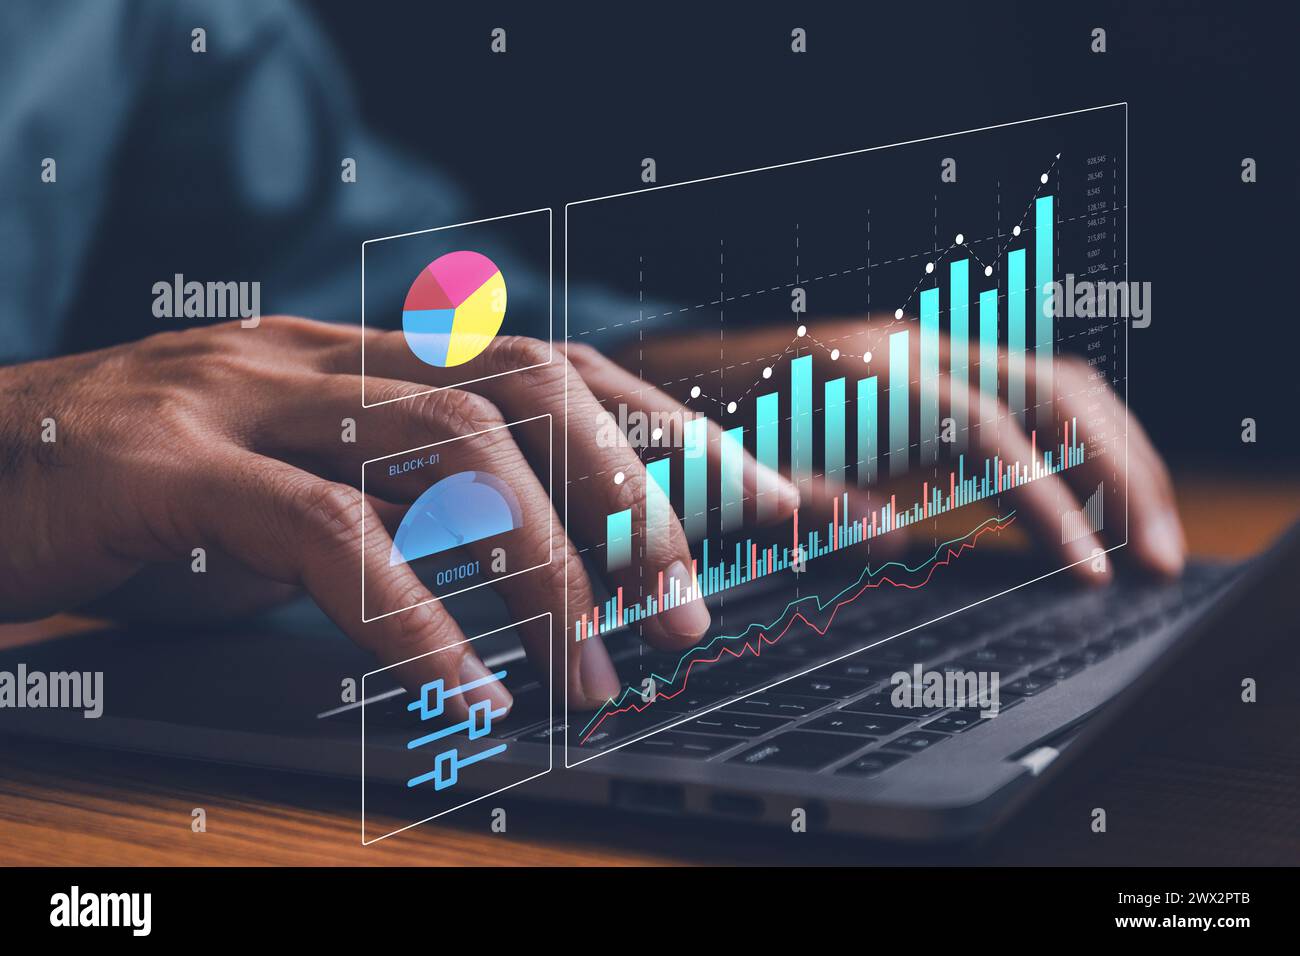 businessman analyzing business Enterprise data management, business analytics with charts, metrics and KPIs to improve organizational performance, mar Stock Photo